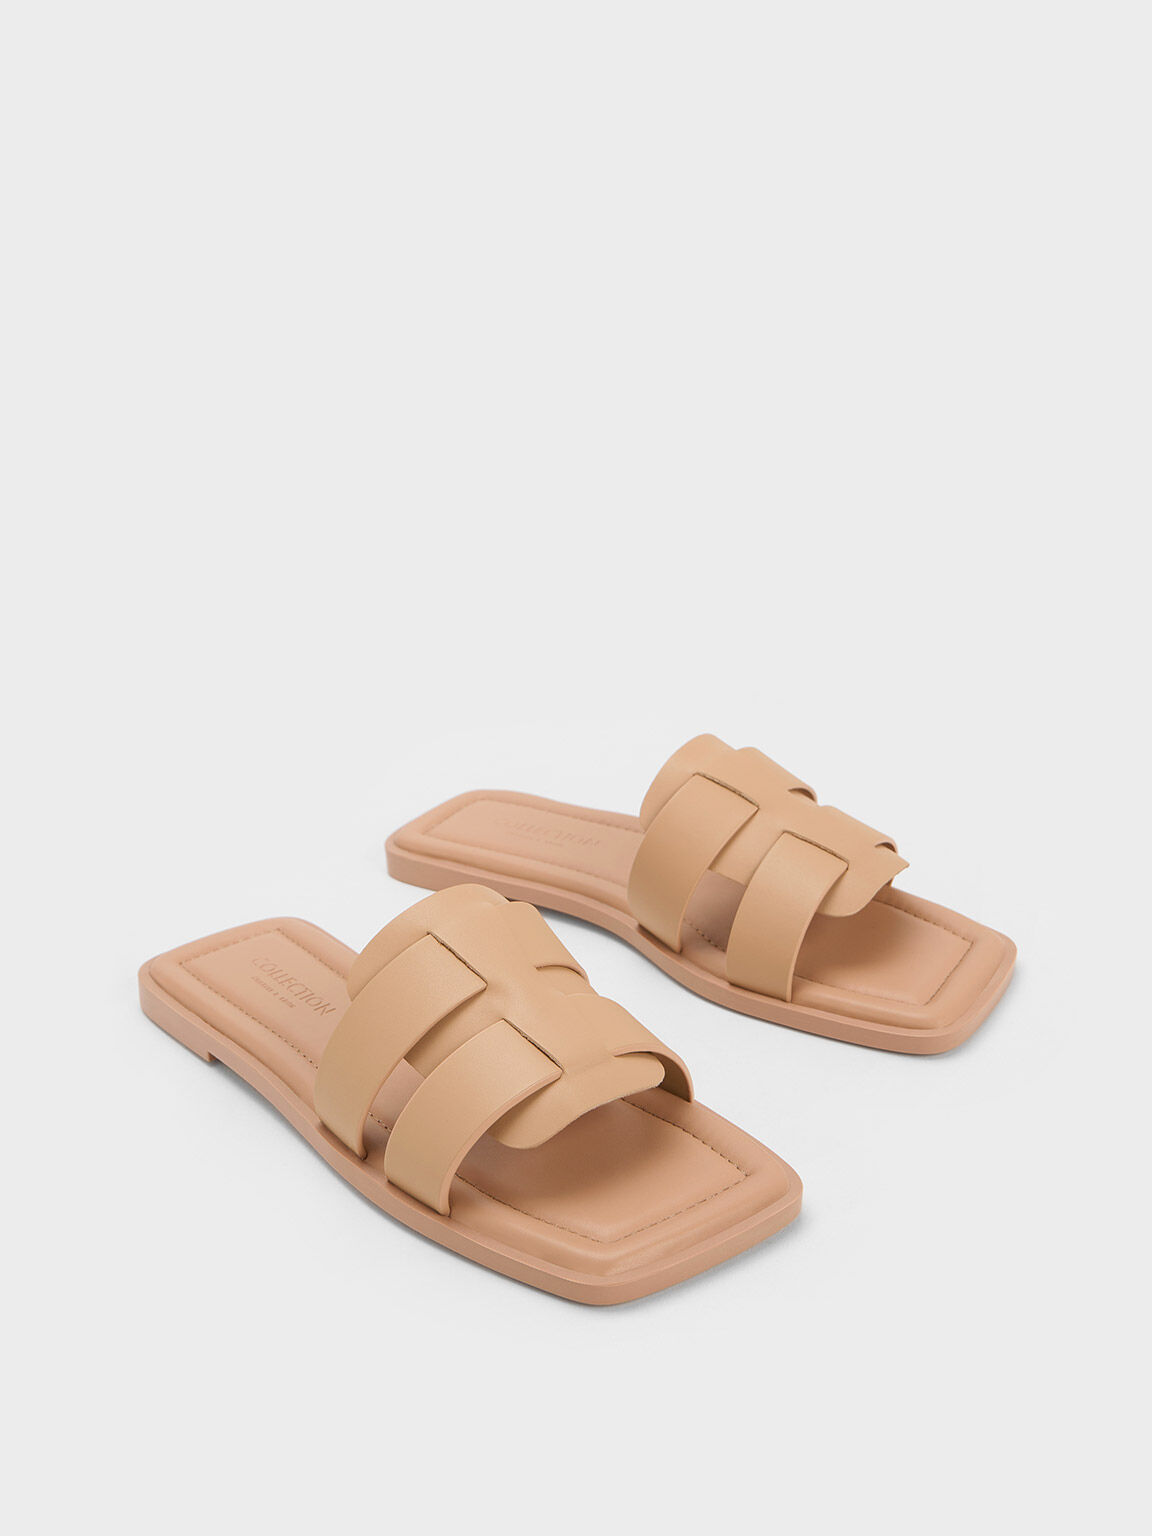 J/Slides Women's Bowie Double Buckle Leather Platform Slide Sandals |  Bloomingdale's